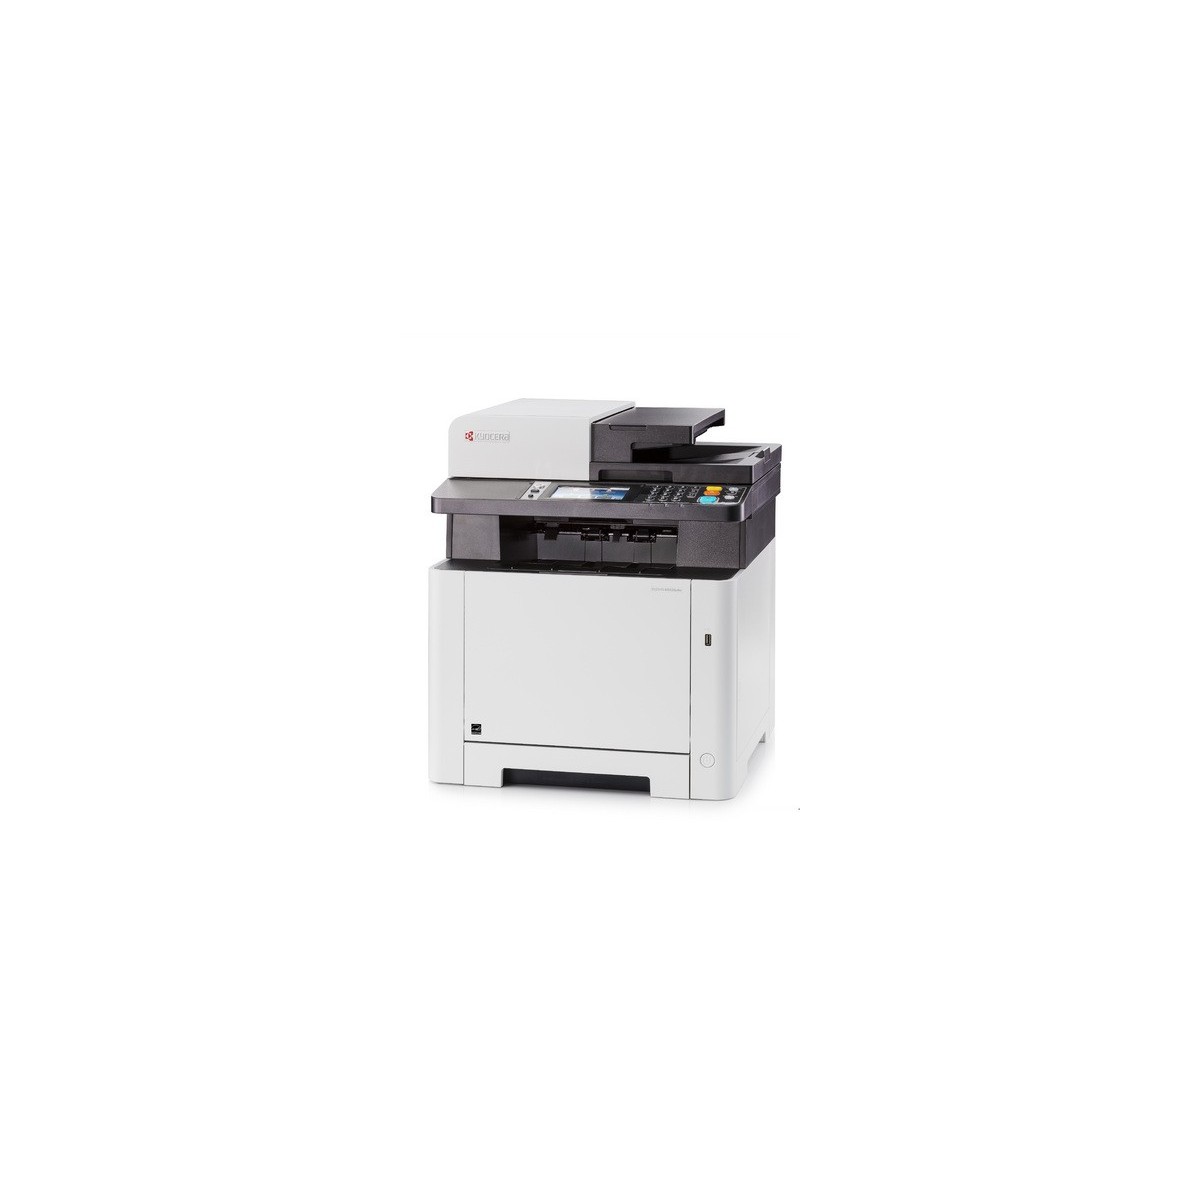 ECOSYS M5526cdn MFP Printer